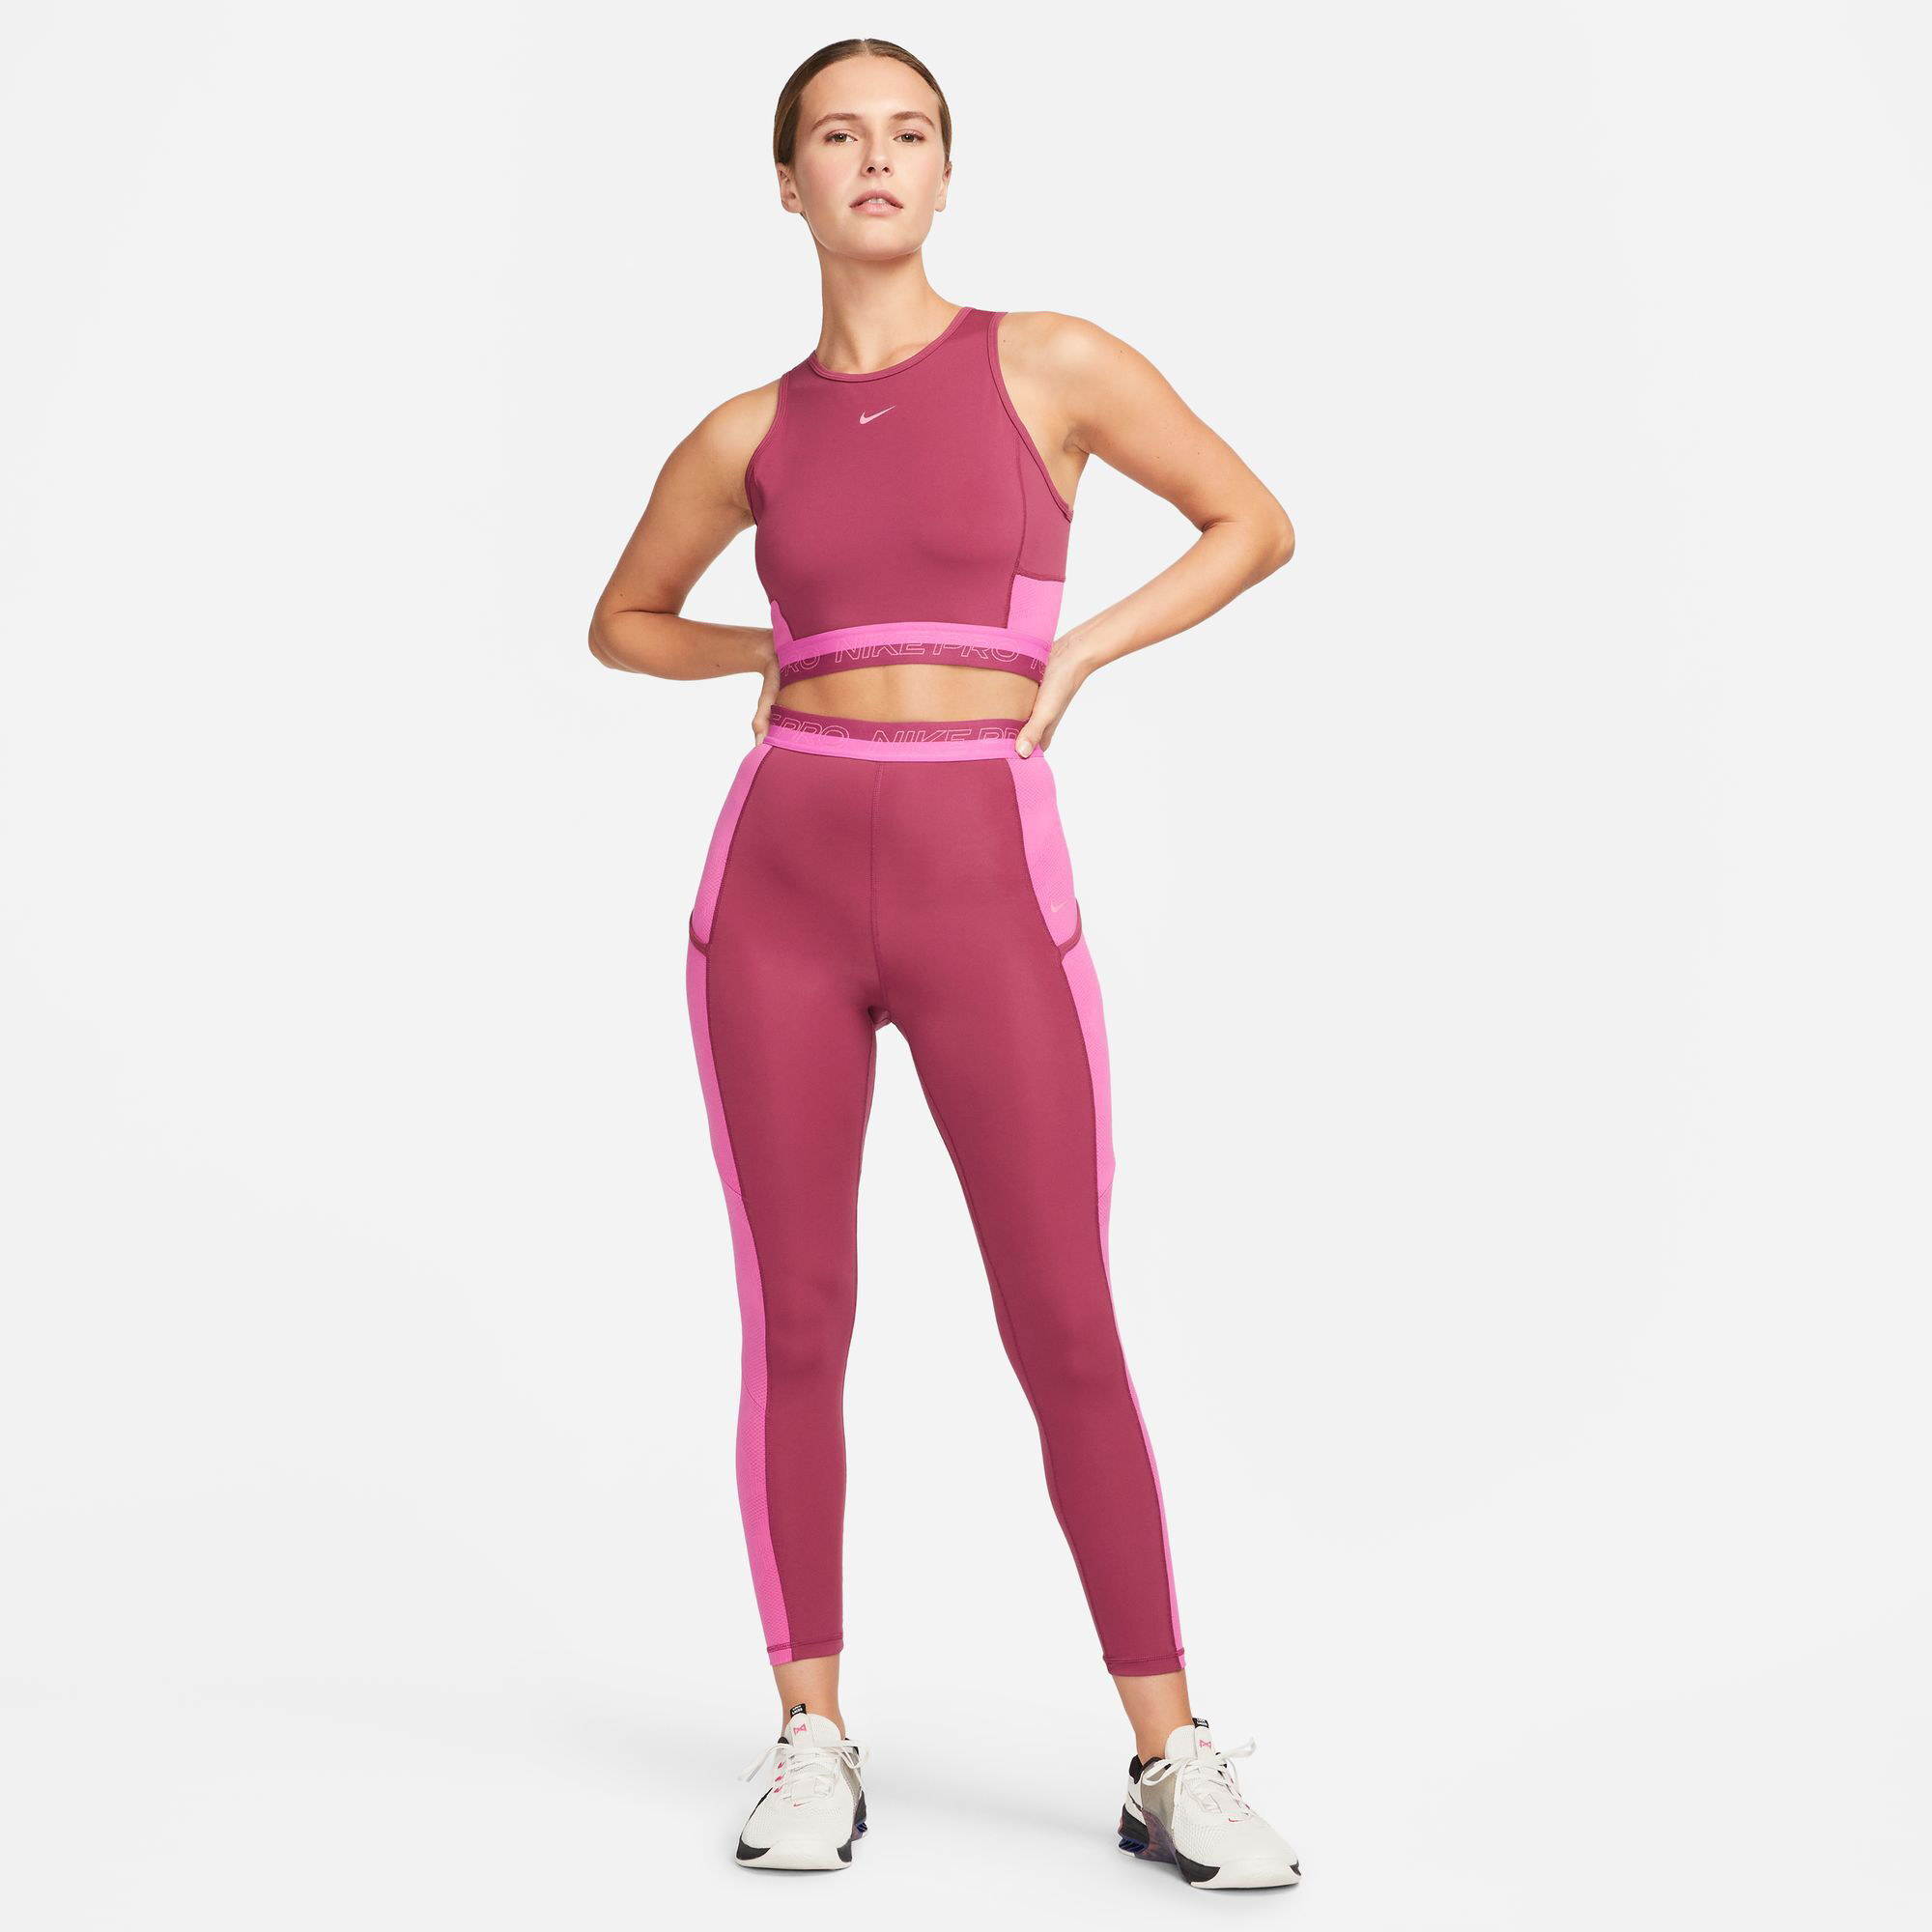 Buy Nike Dri-Fit Performance Cropped Tank Top Women Red, Pink online